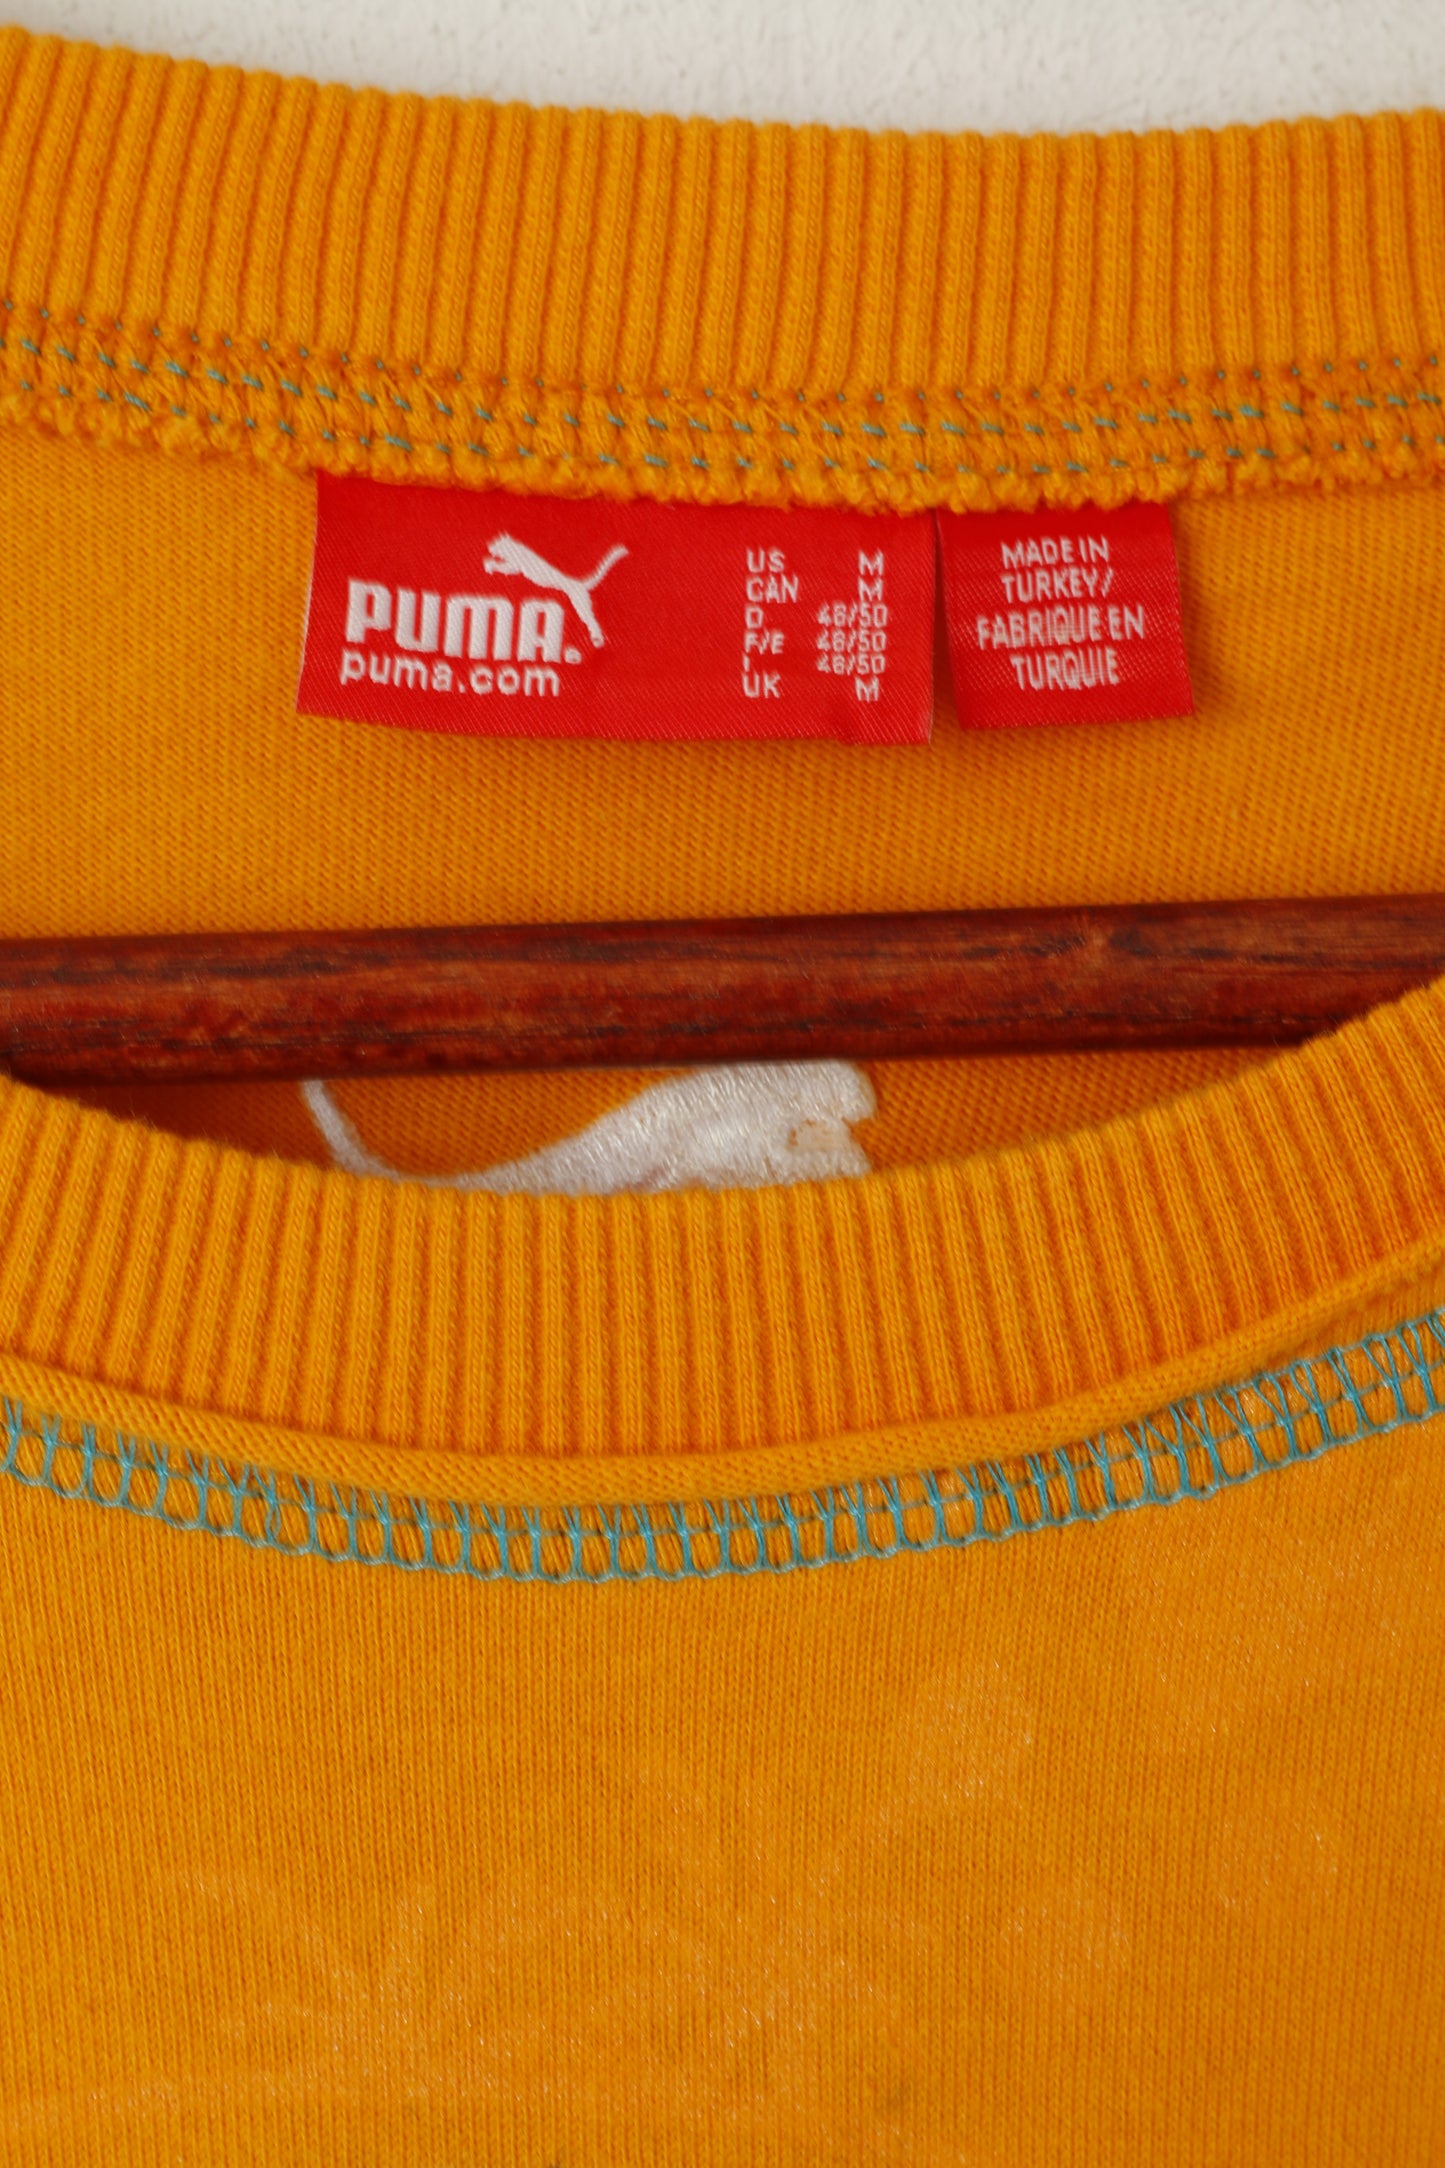 Puma Men M T- Shirt Orange Cotton Graphic Puma Fresh Since 1948 Rugby Short Sleeve Top